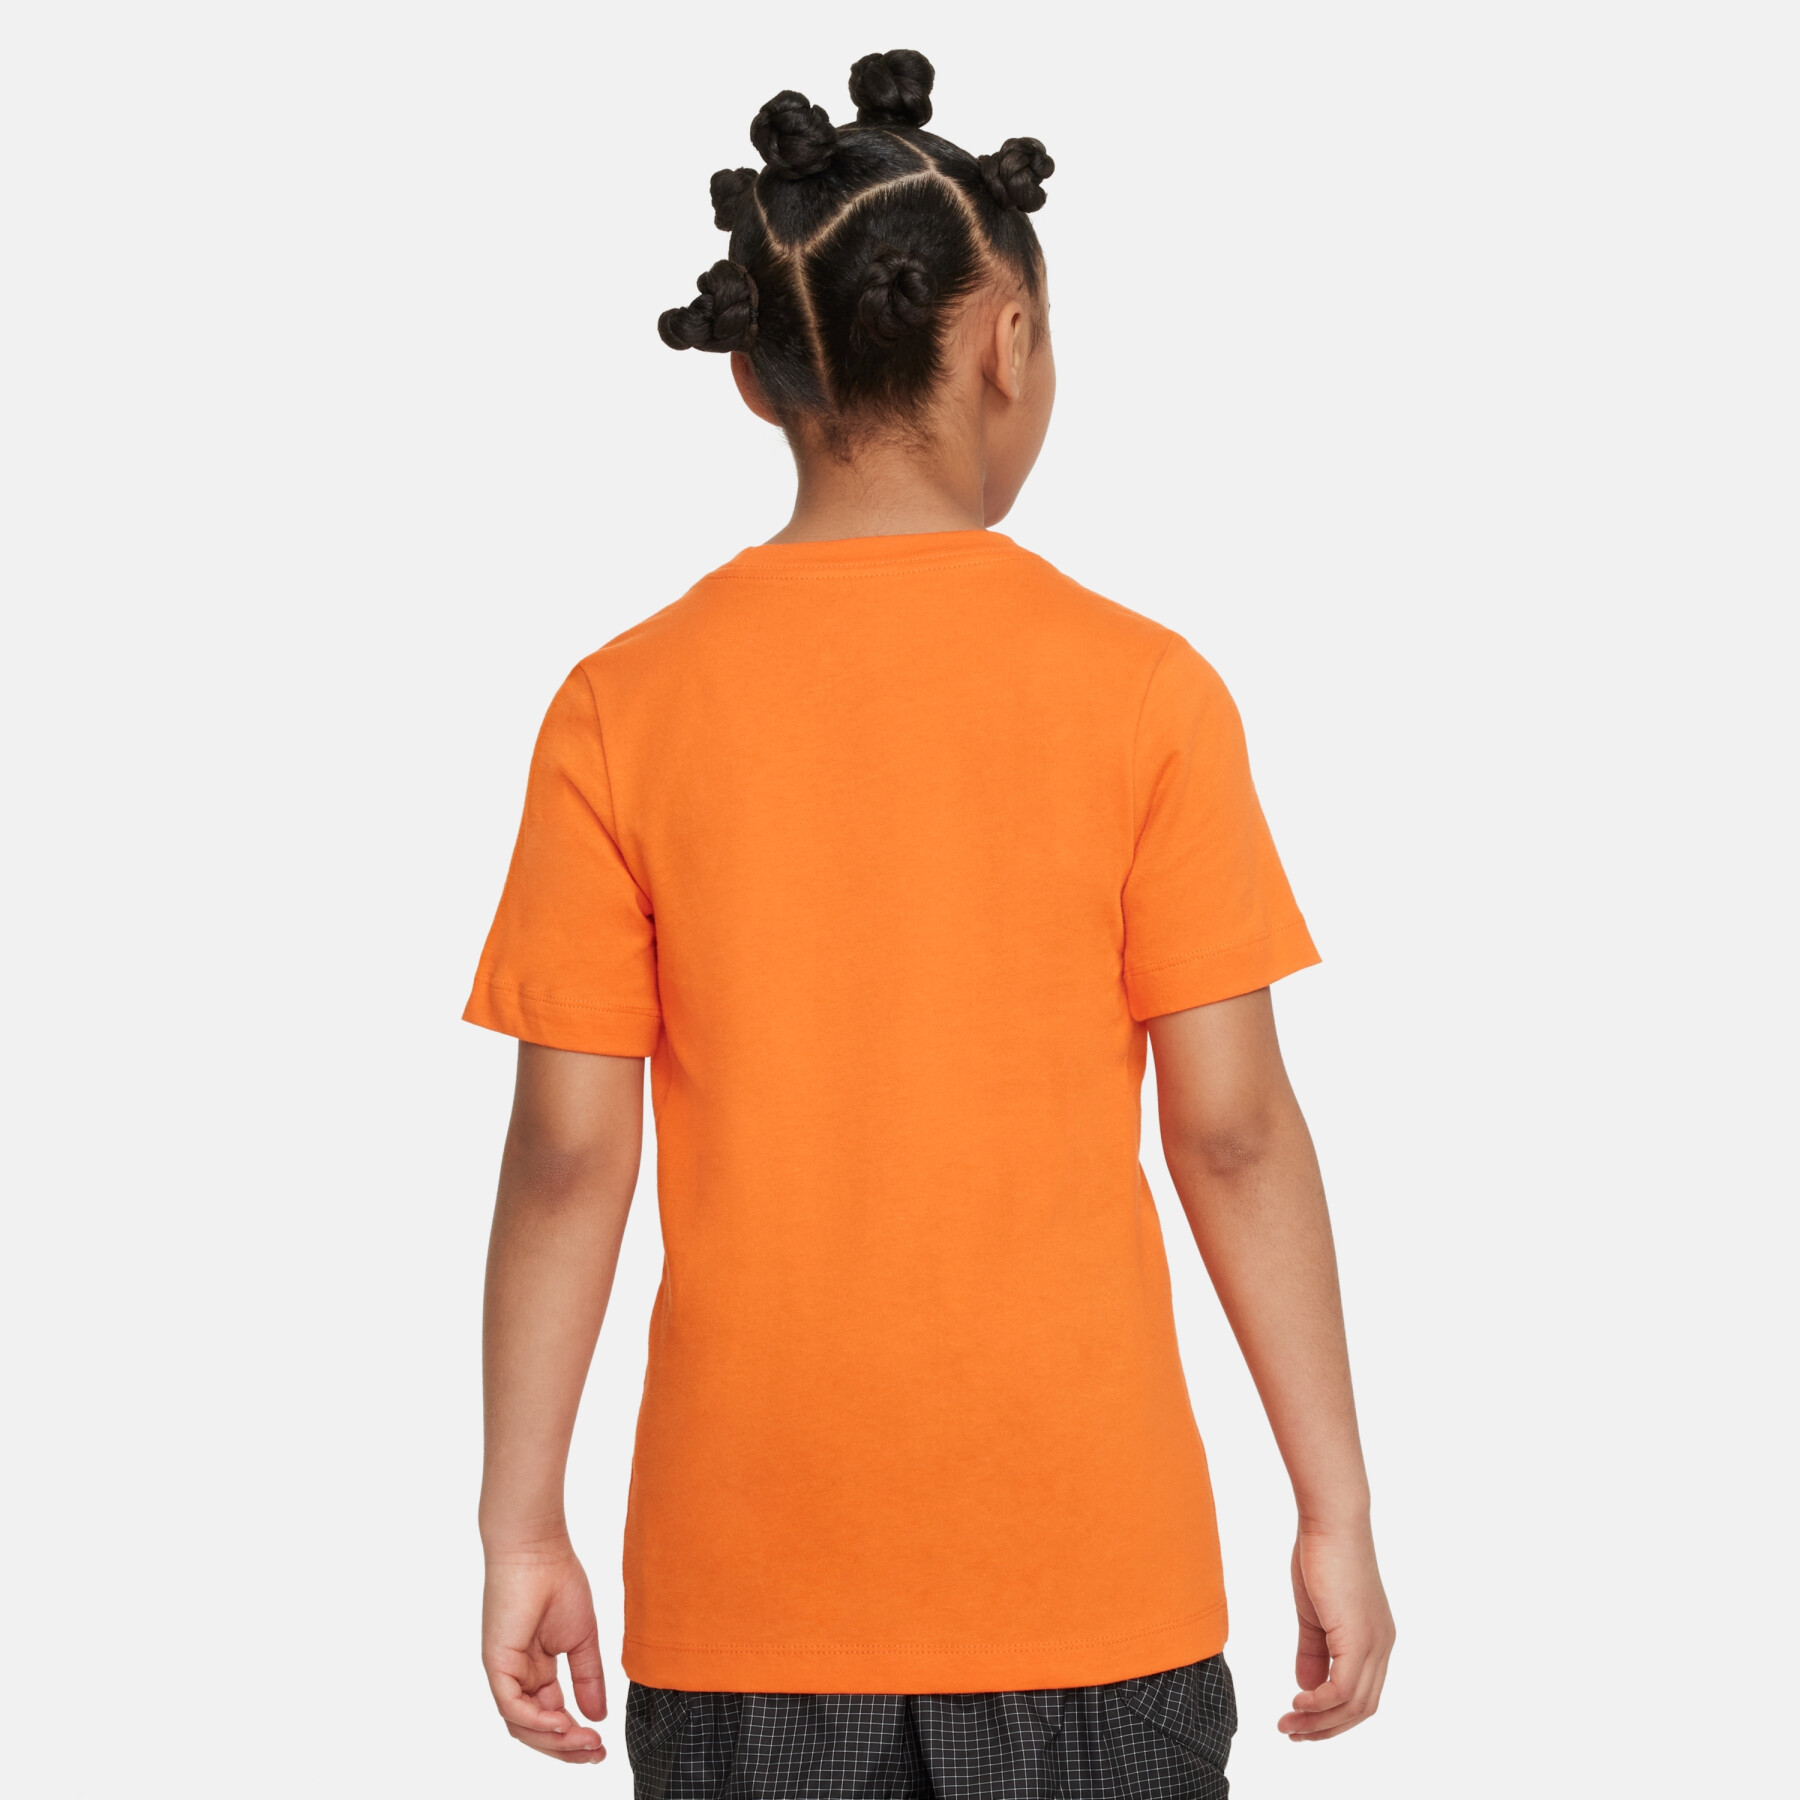 Kid's T-shirt Nike